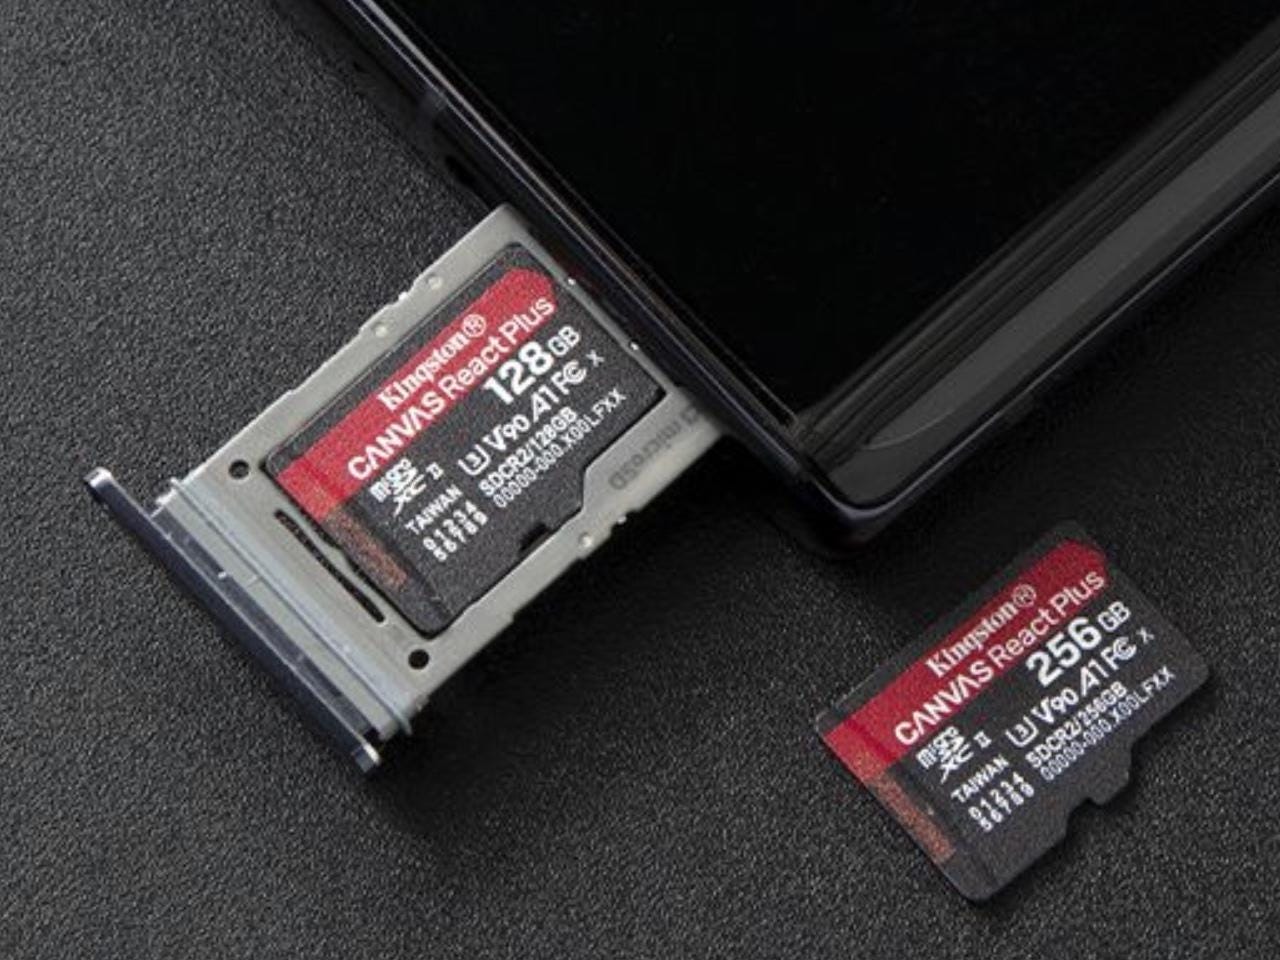 Canvas React Plus microSDS card